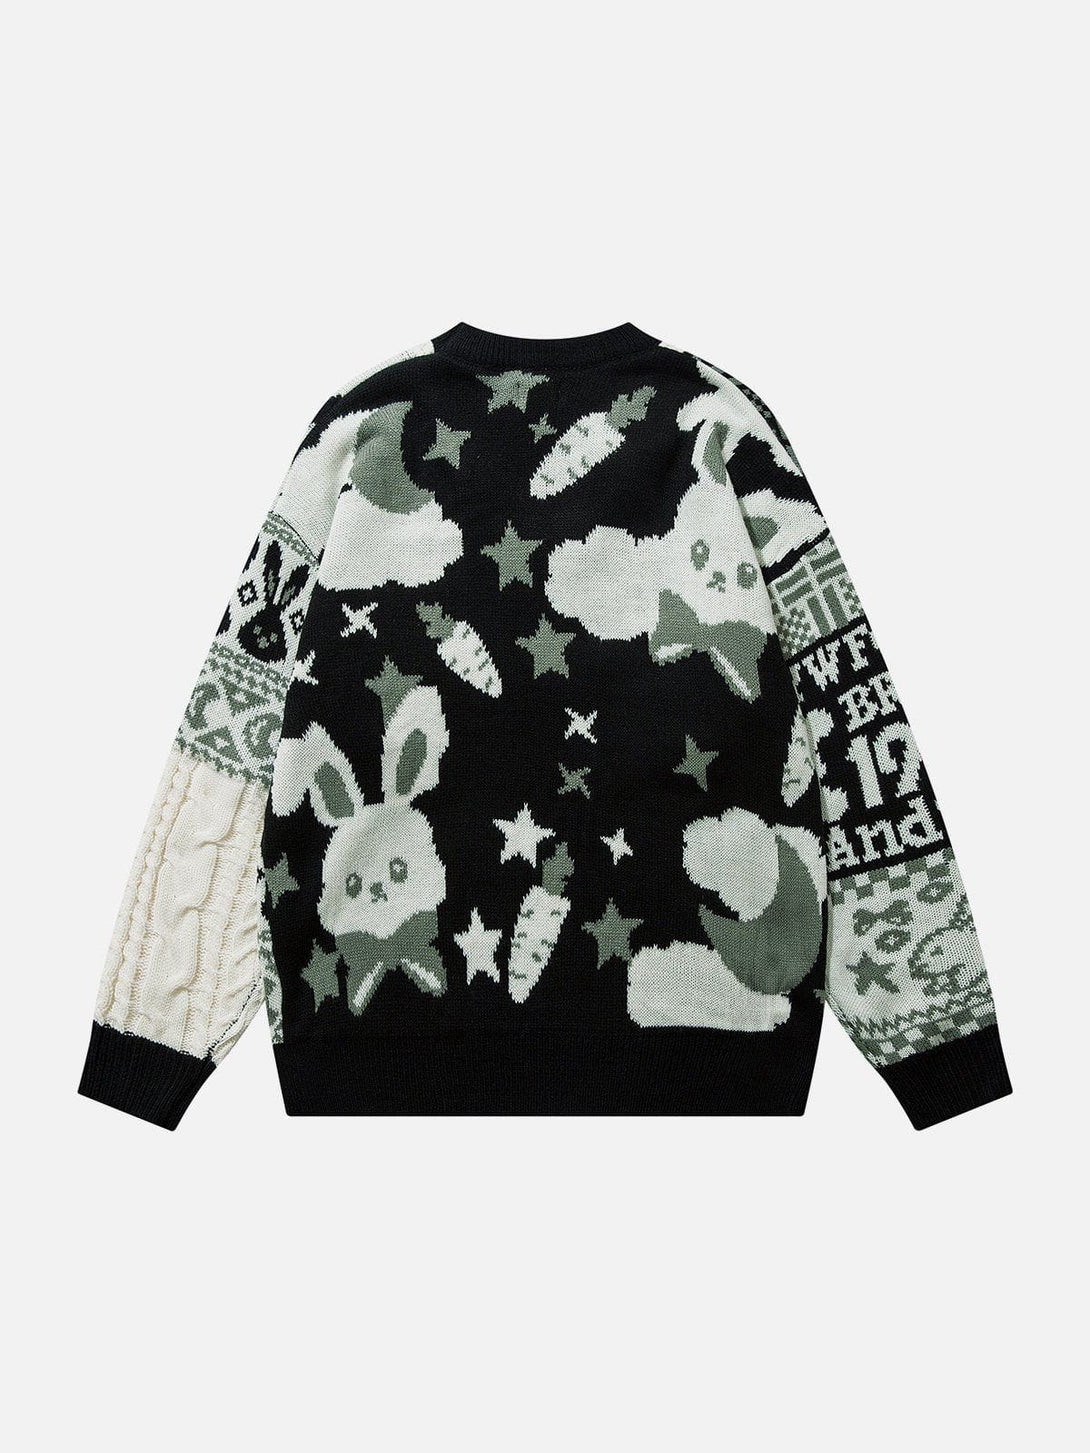 Levefly - Rabbit Jacquard Sweater - Streetwear Fashion - levefly.com